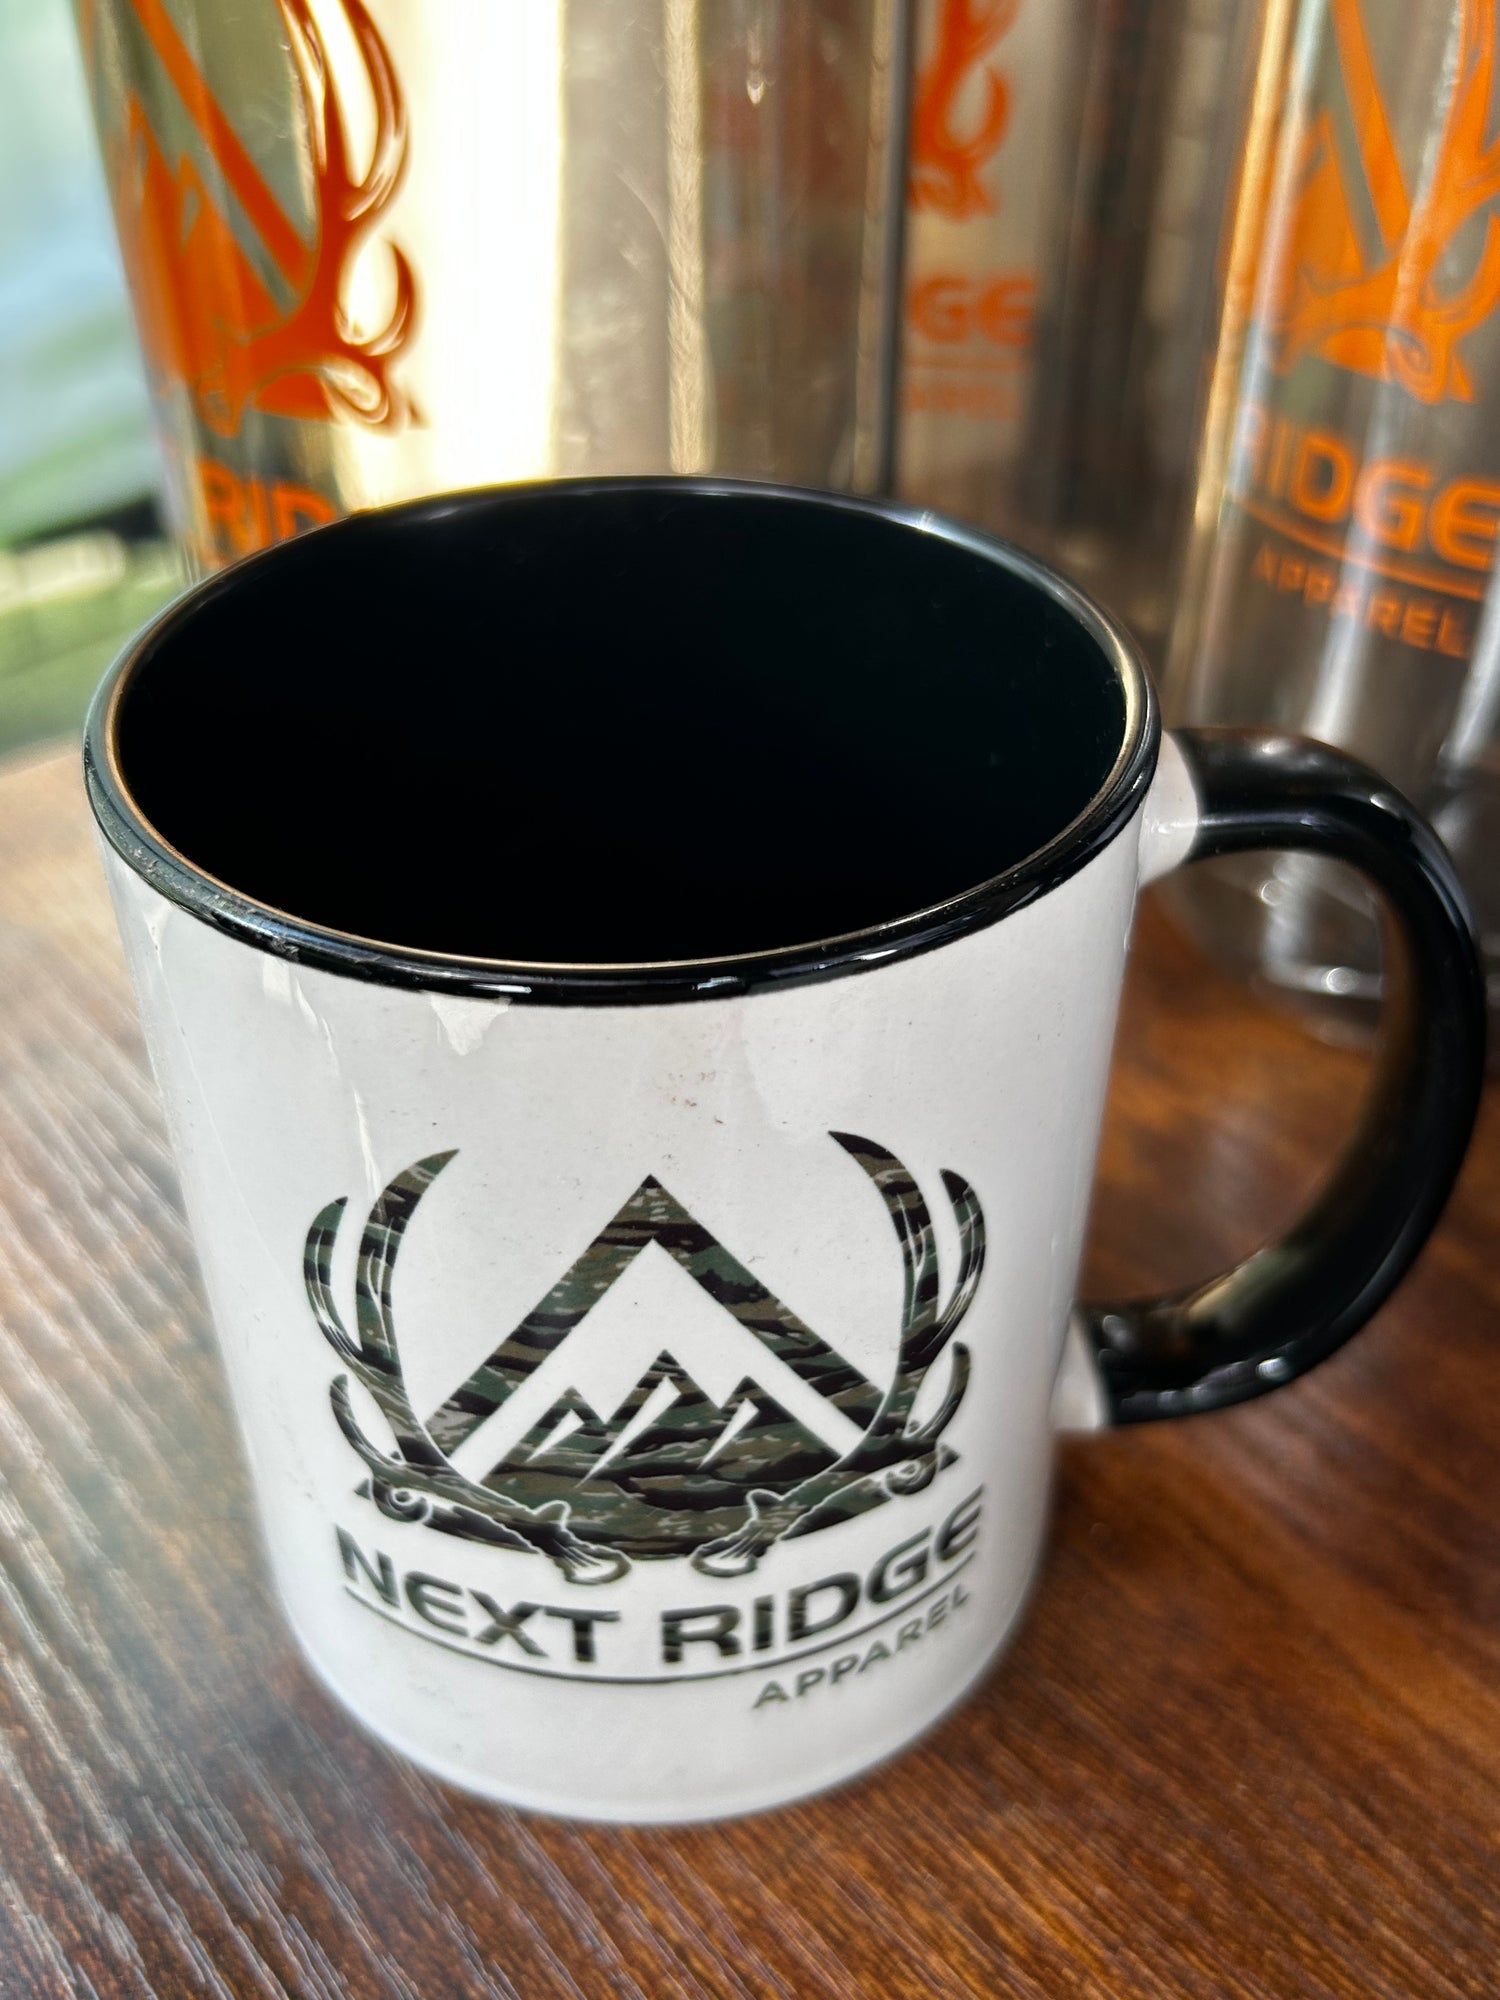 Next Ridge Coffee Mug